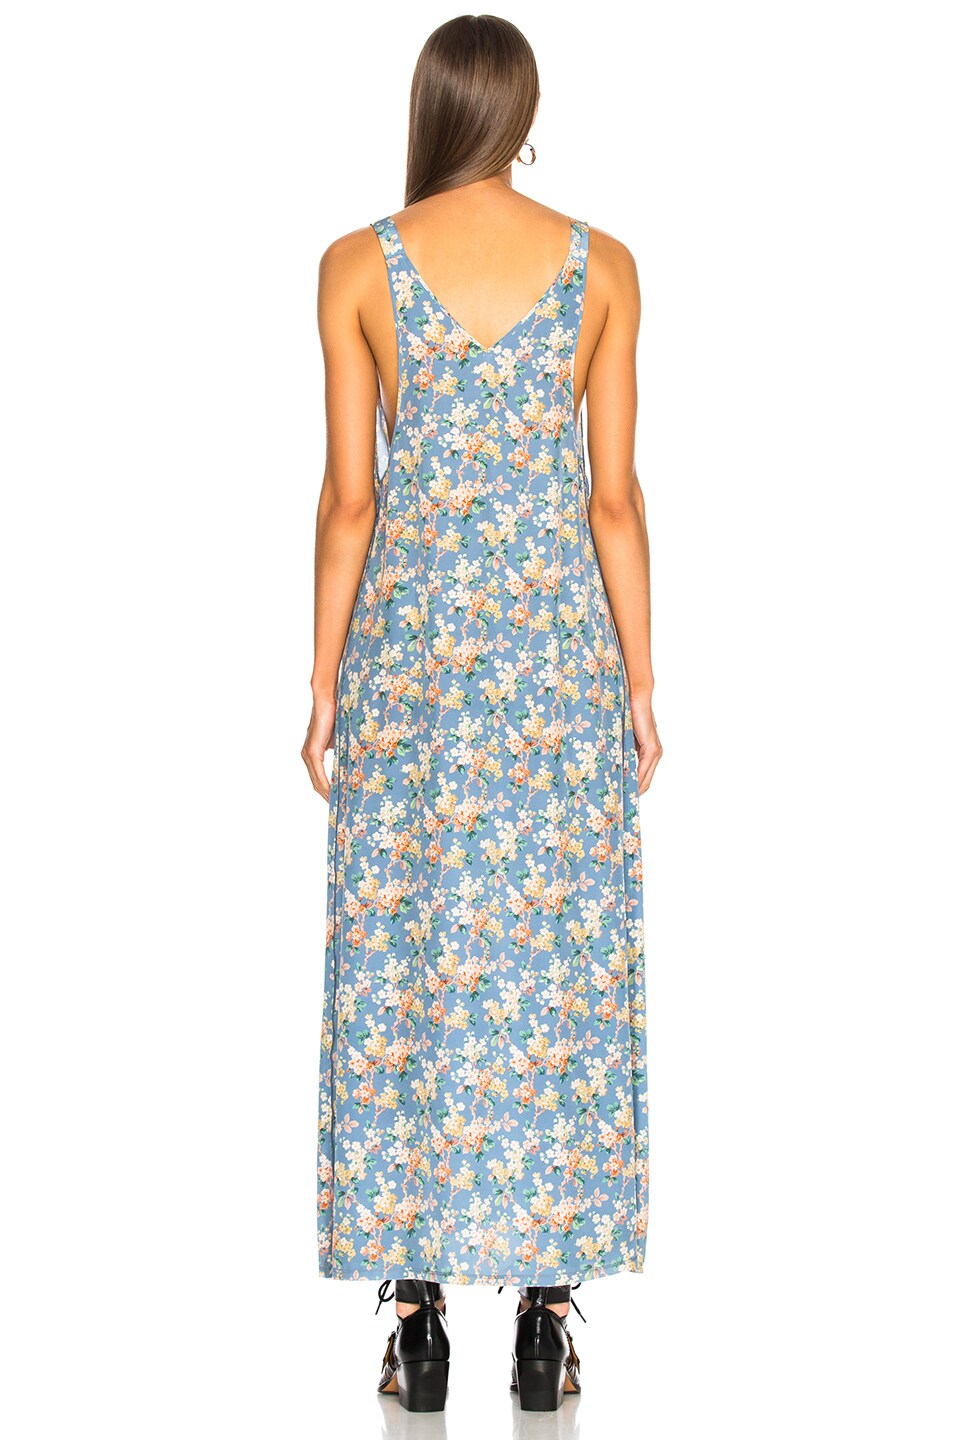 R13 Long Slip Dress in Blue Floral | FWRD